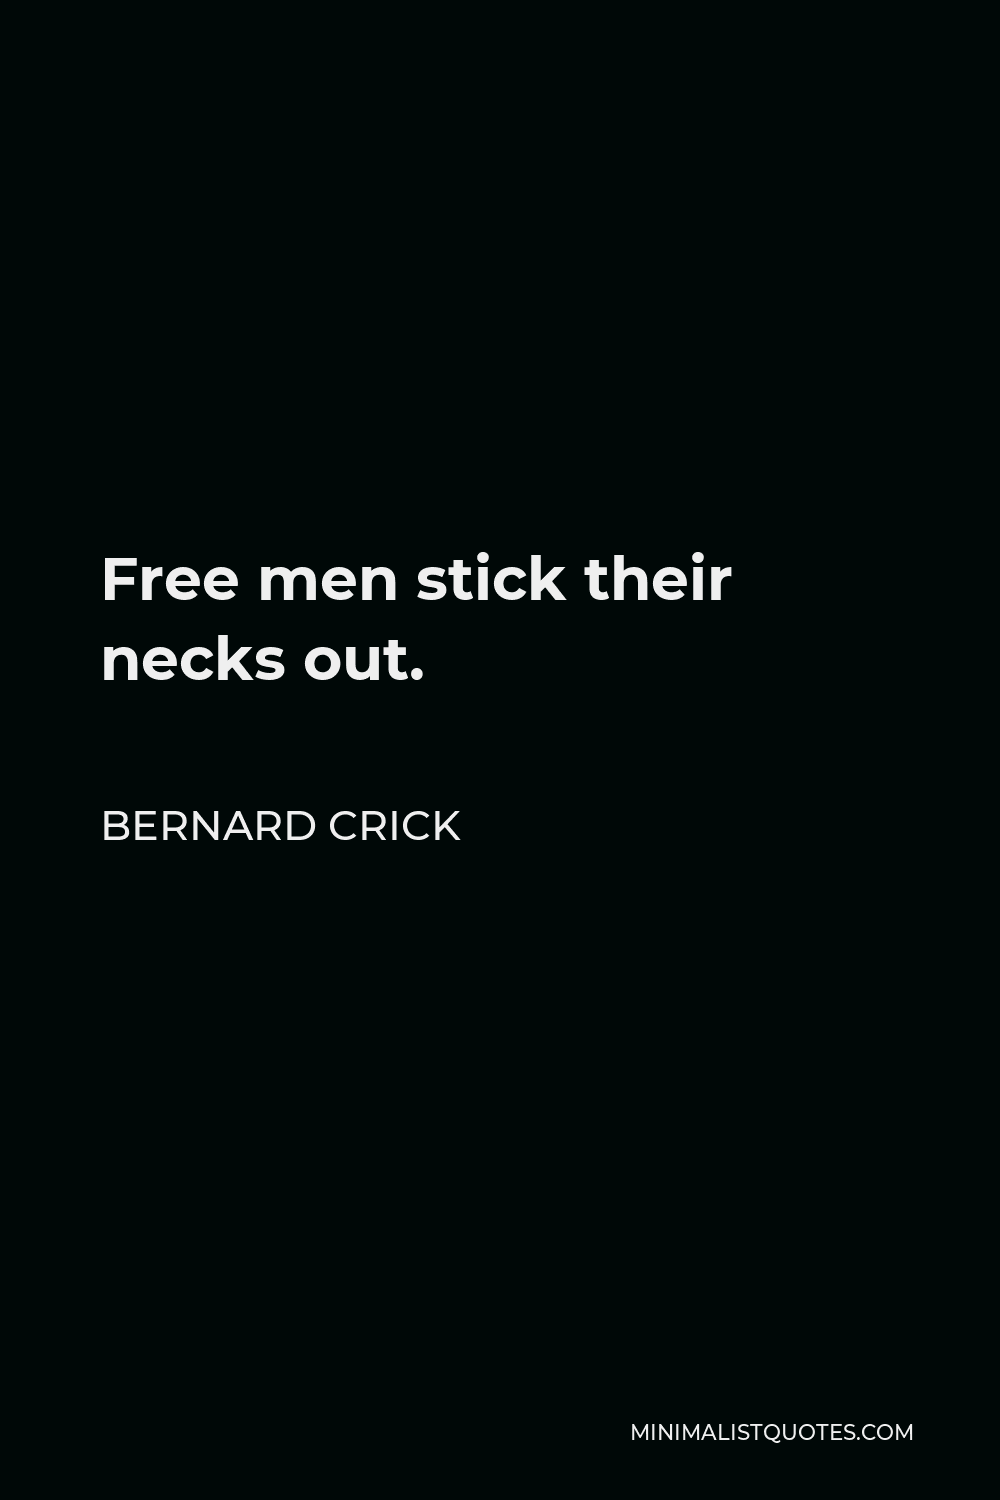 Bernard Crick Quote - Free men stick their necks out.